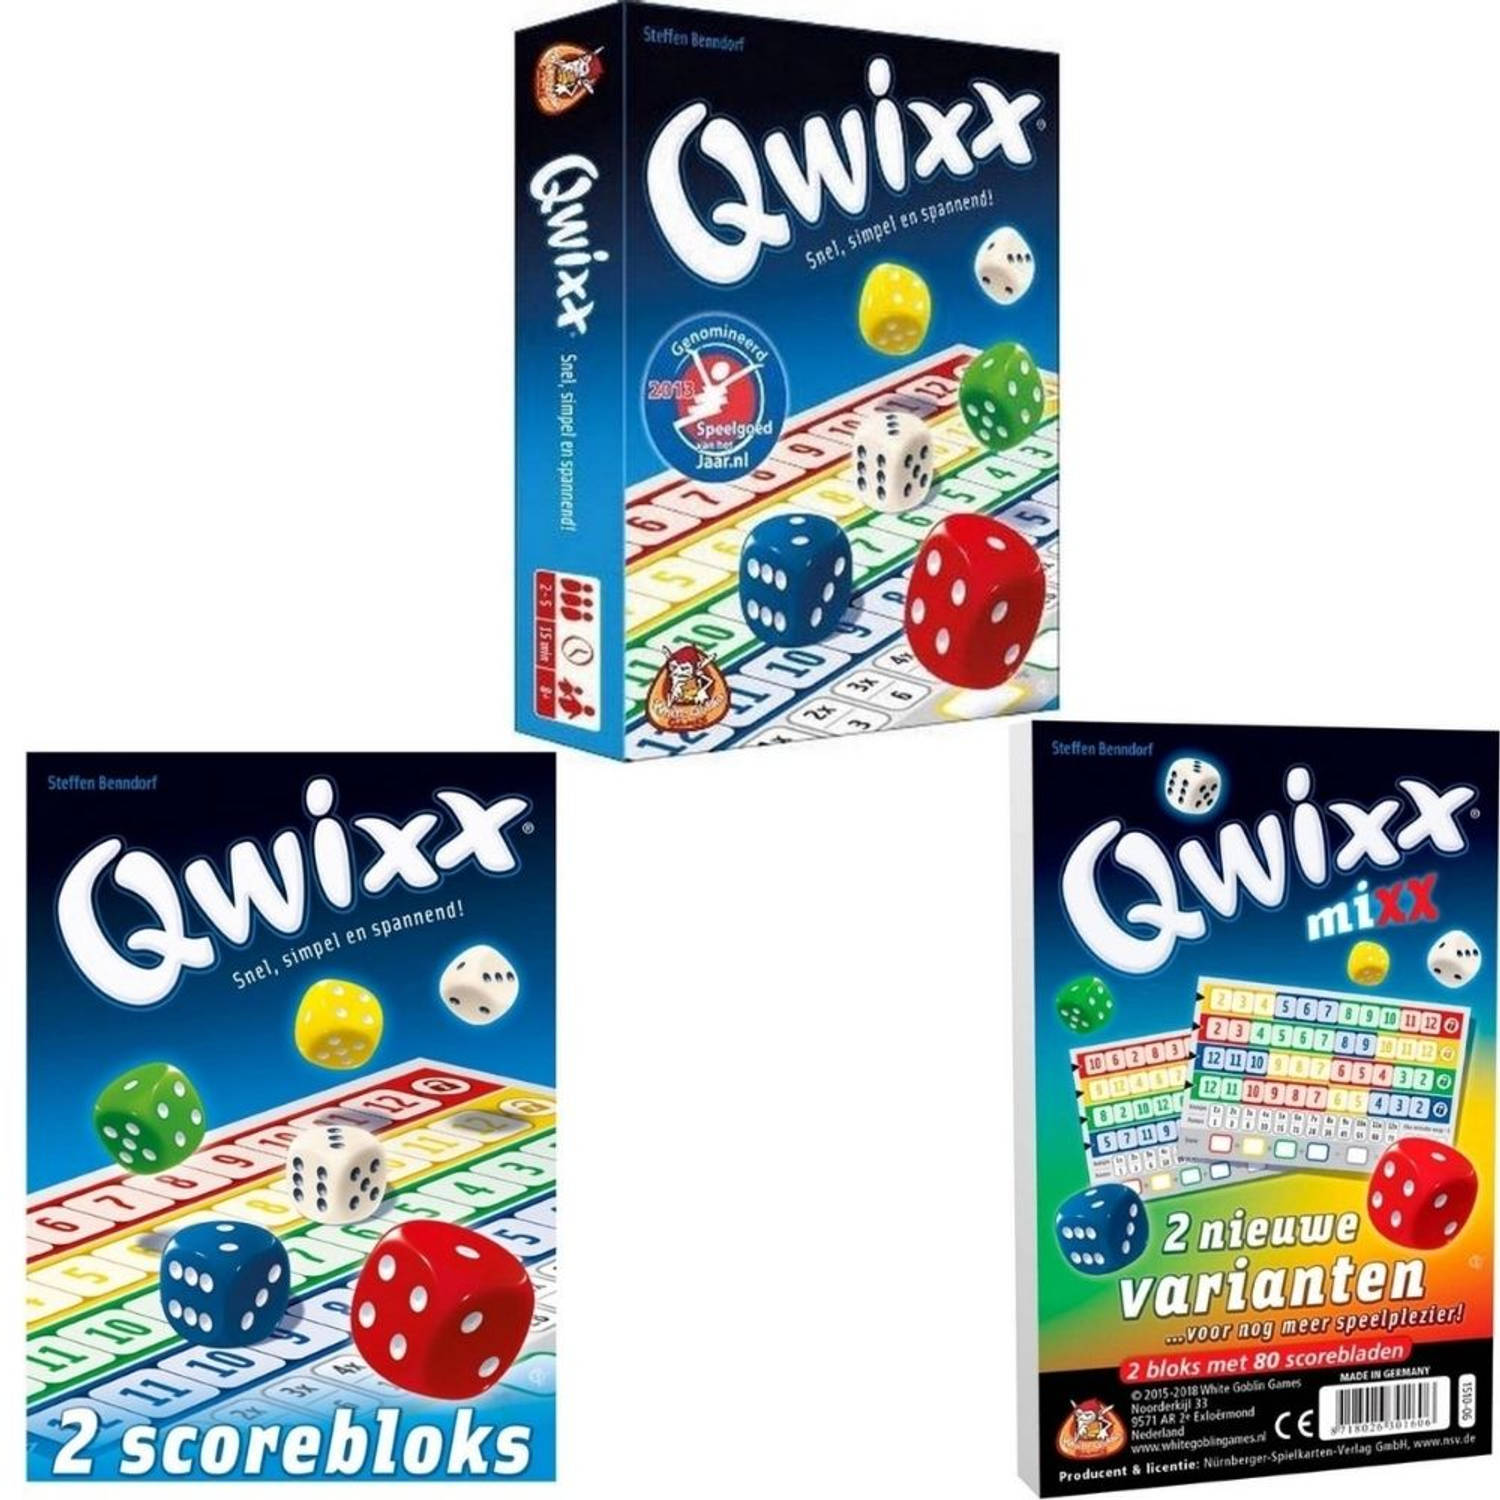 Spellenbundel - 3 stuks - Dobbelspel - Qwixx & 2 extra scoreblocks & Qwixx Mixx